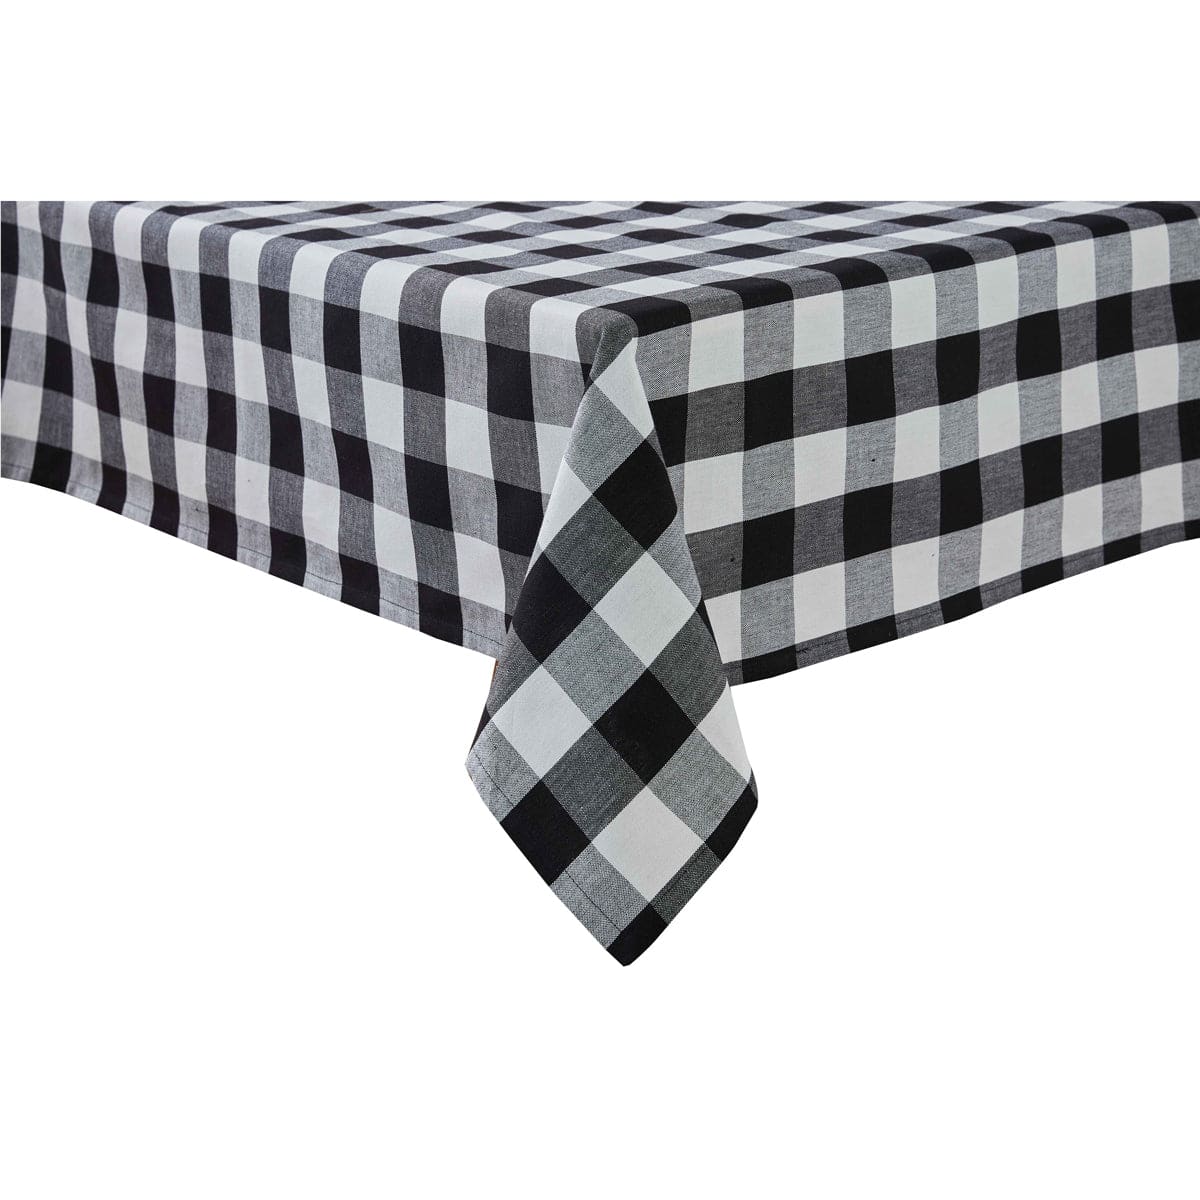 Wicklow Check in Black &amp; Cream Tablecloth 54&quot; x 54&quot; Square-Park Designs-The Village Merchant